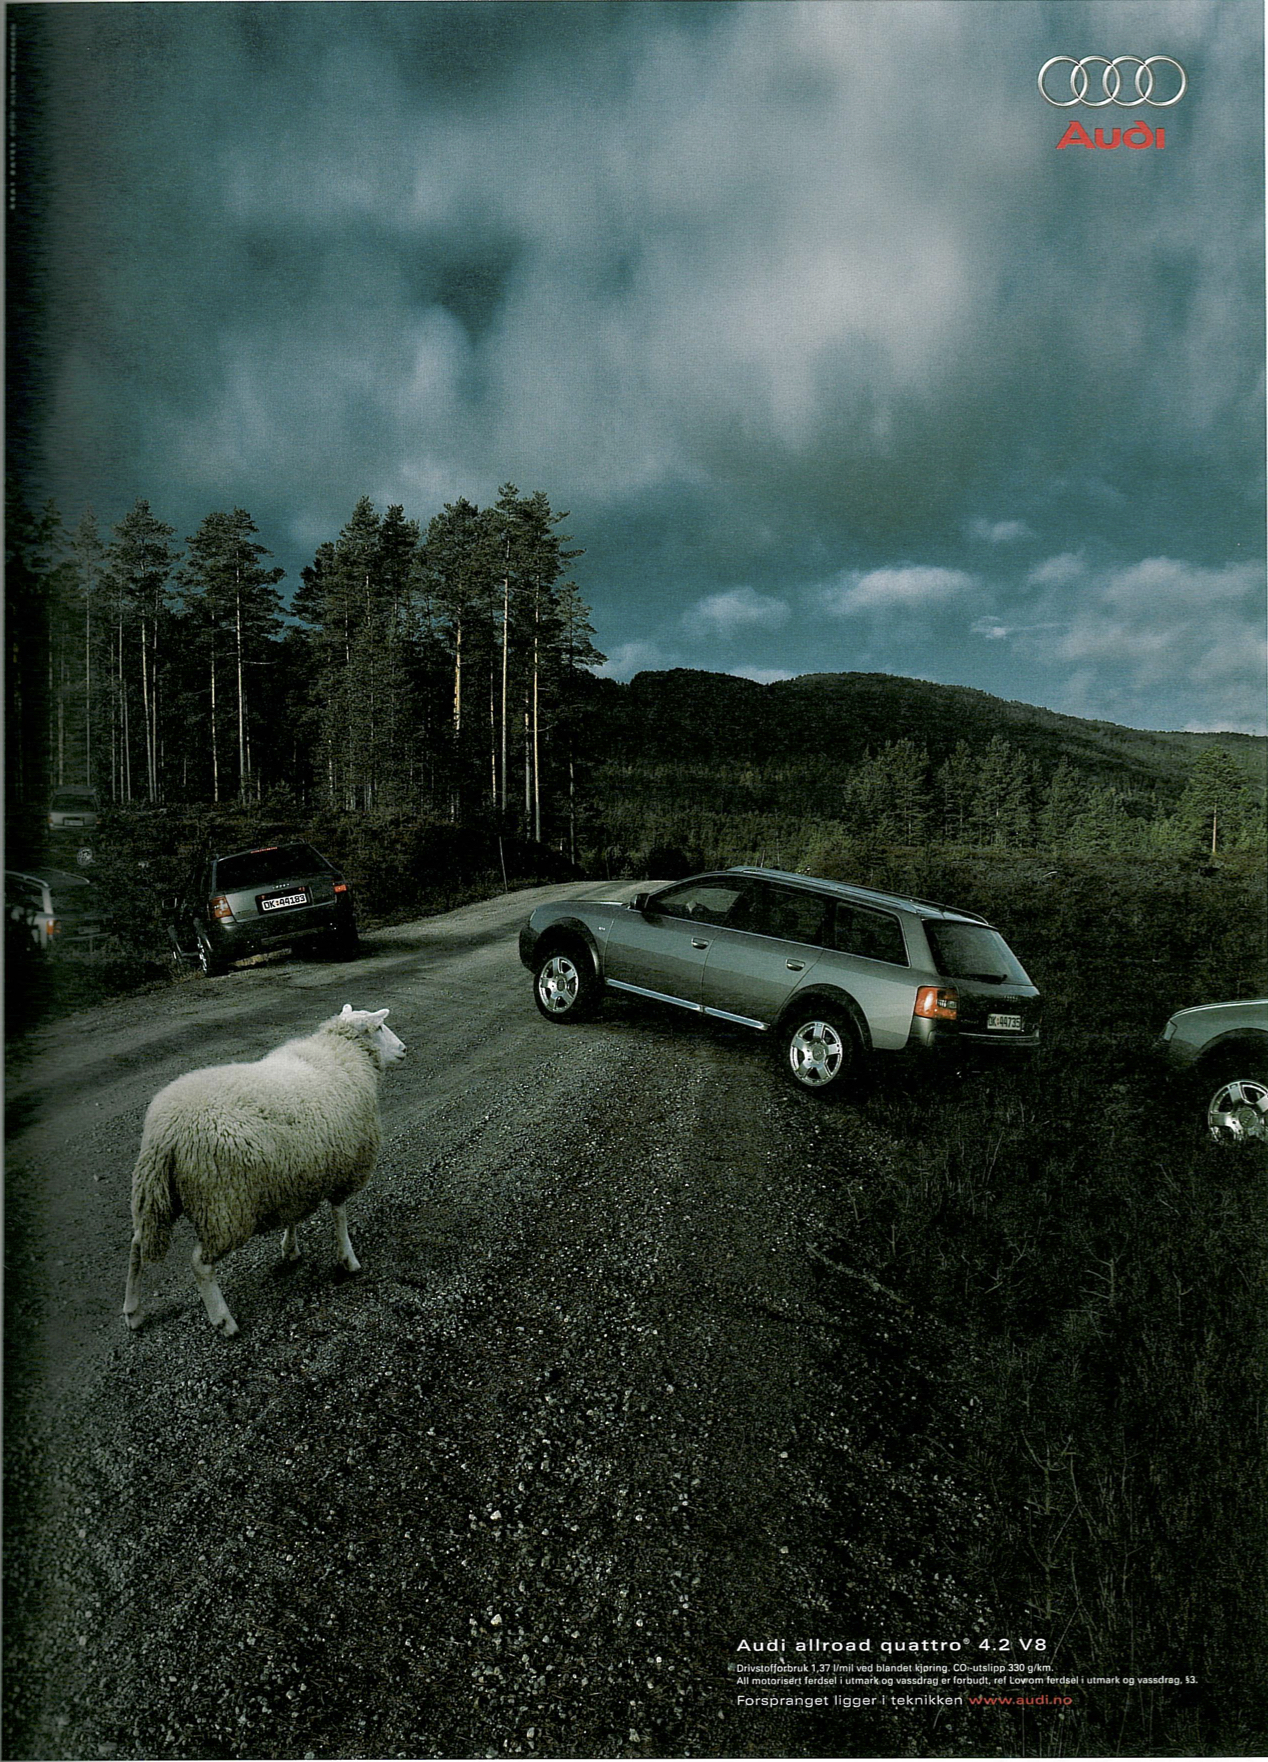 Audi Allroad Quattro, Bates Red Cell (Thorbjørn Naug og Øystein Halvorsen), 2003